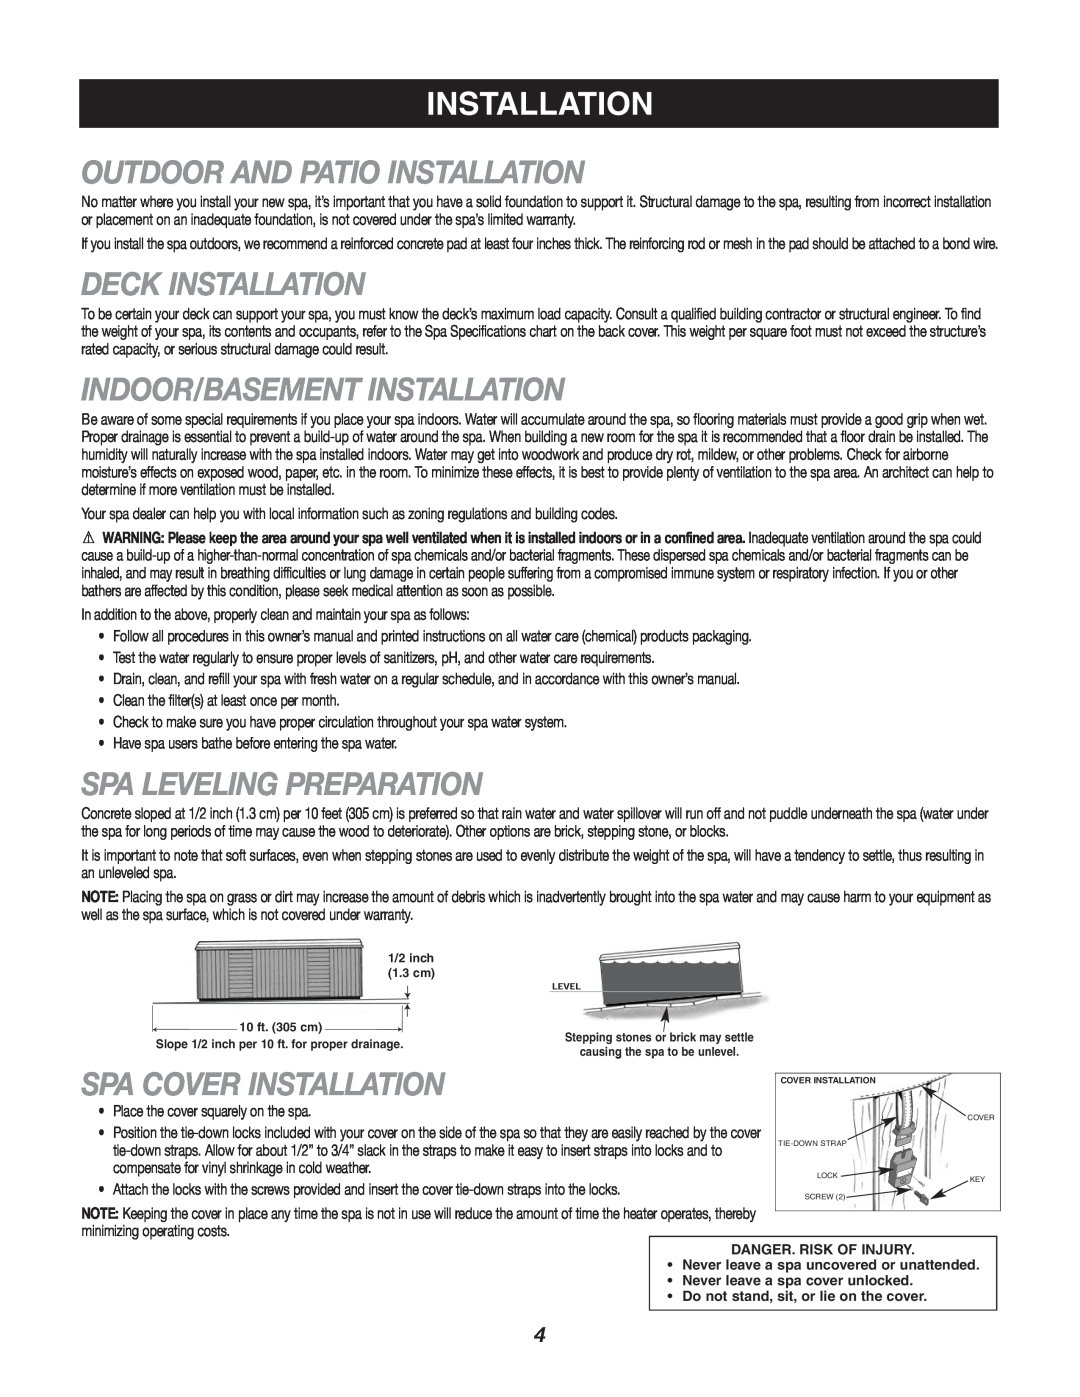 Caldera Highland Series owner manual Outdoor And Patio Installation, Deck Installation, Indoor/Basement Installation 